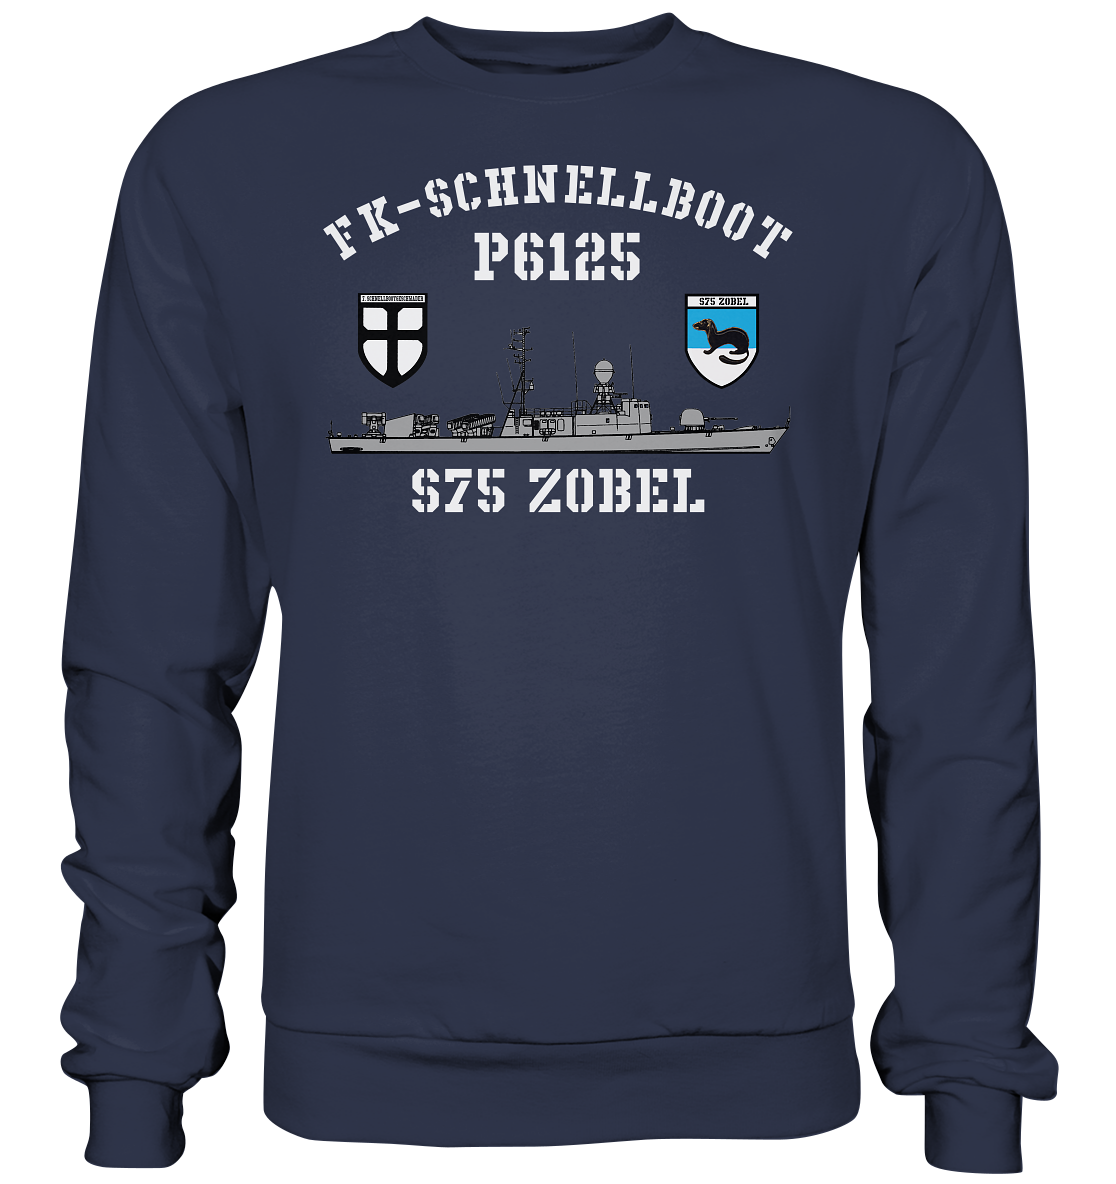 P6125 S75 ZOBEL 7.SG - Premium Sweatshirt